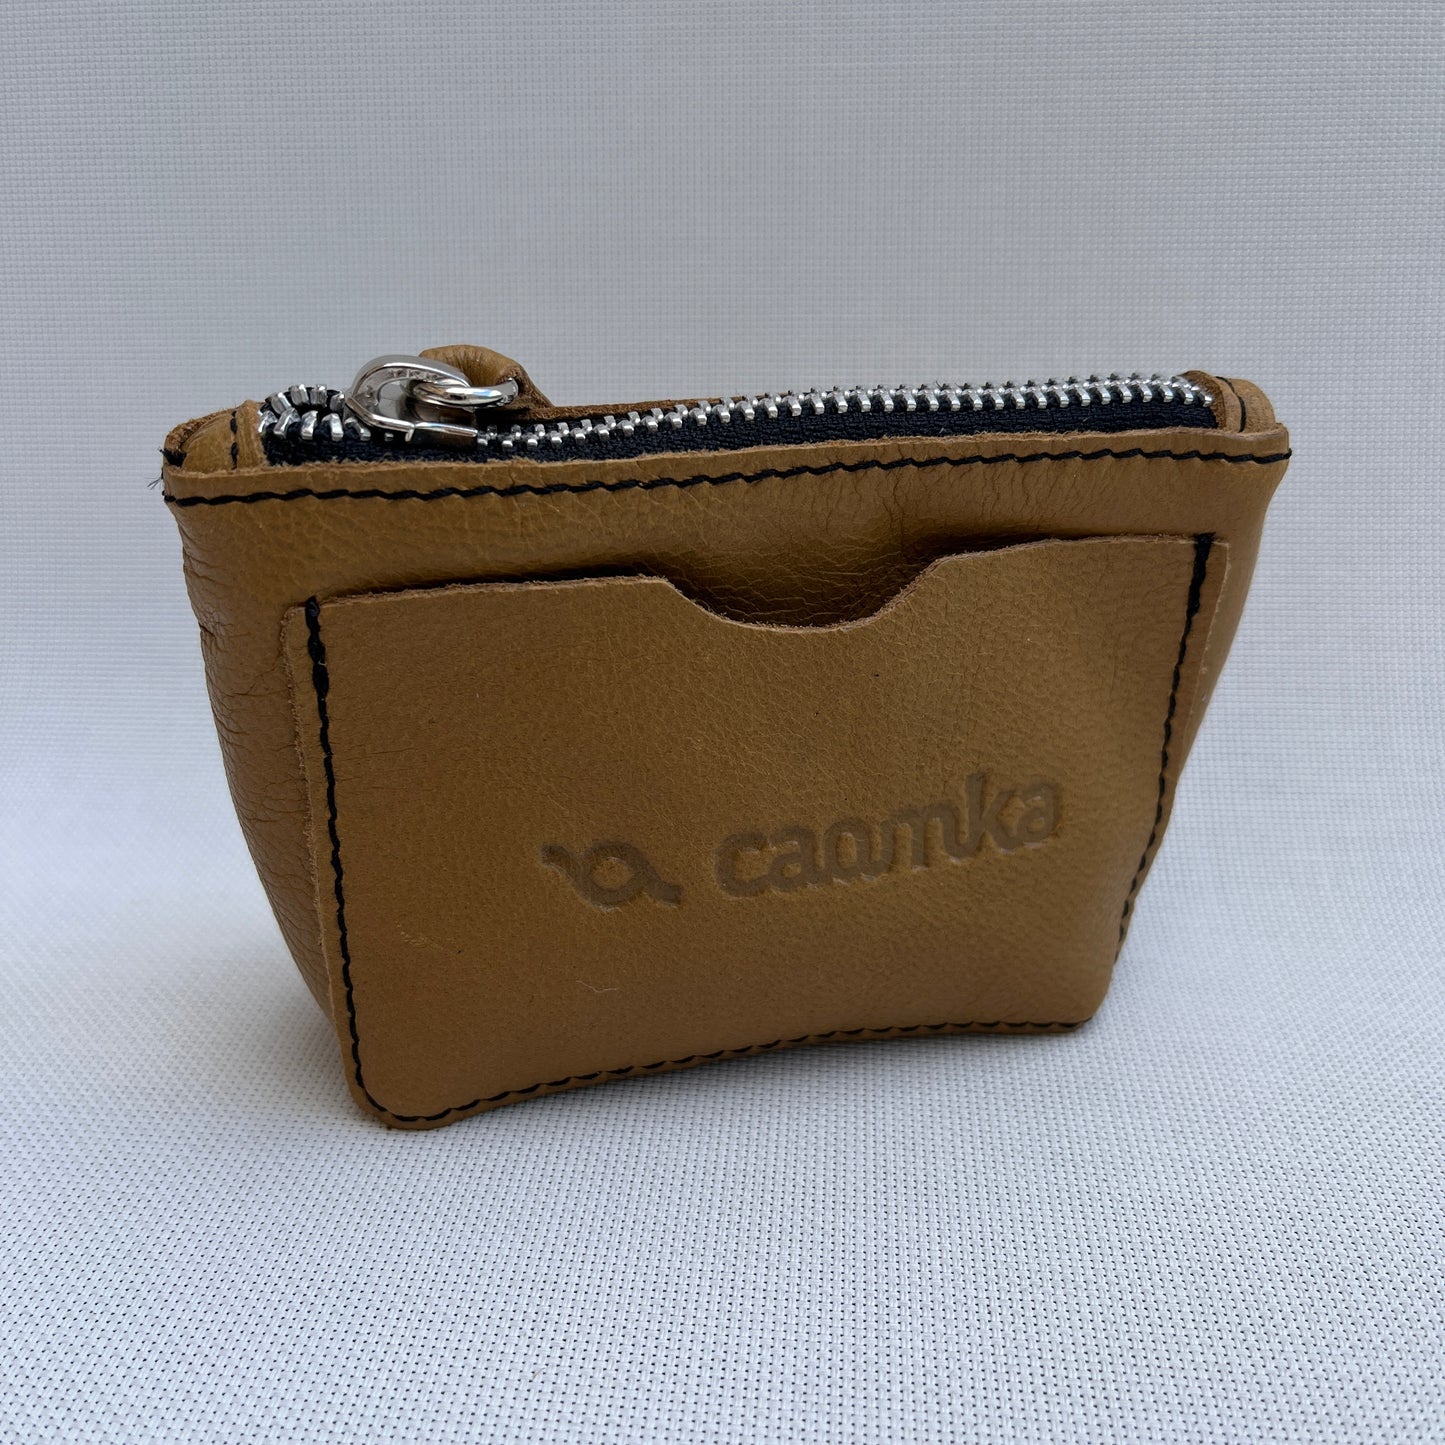 CAOMKA Wink Wallet Natural BioCuir® Leather Exclusive Artikelnr. 12436